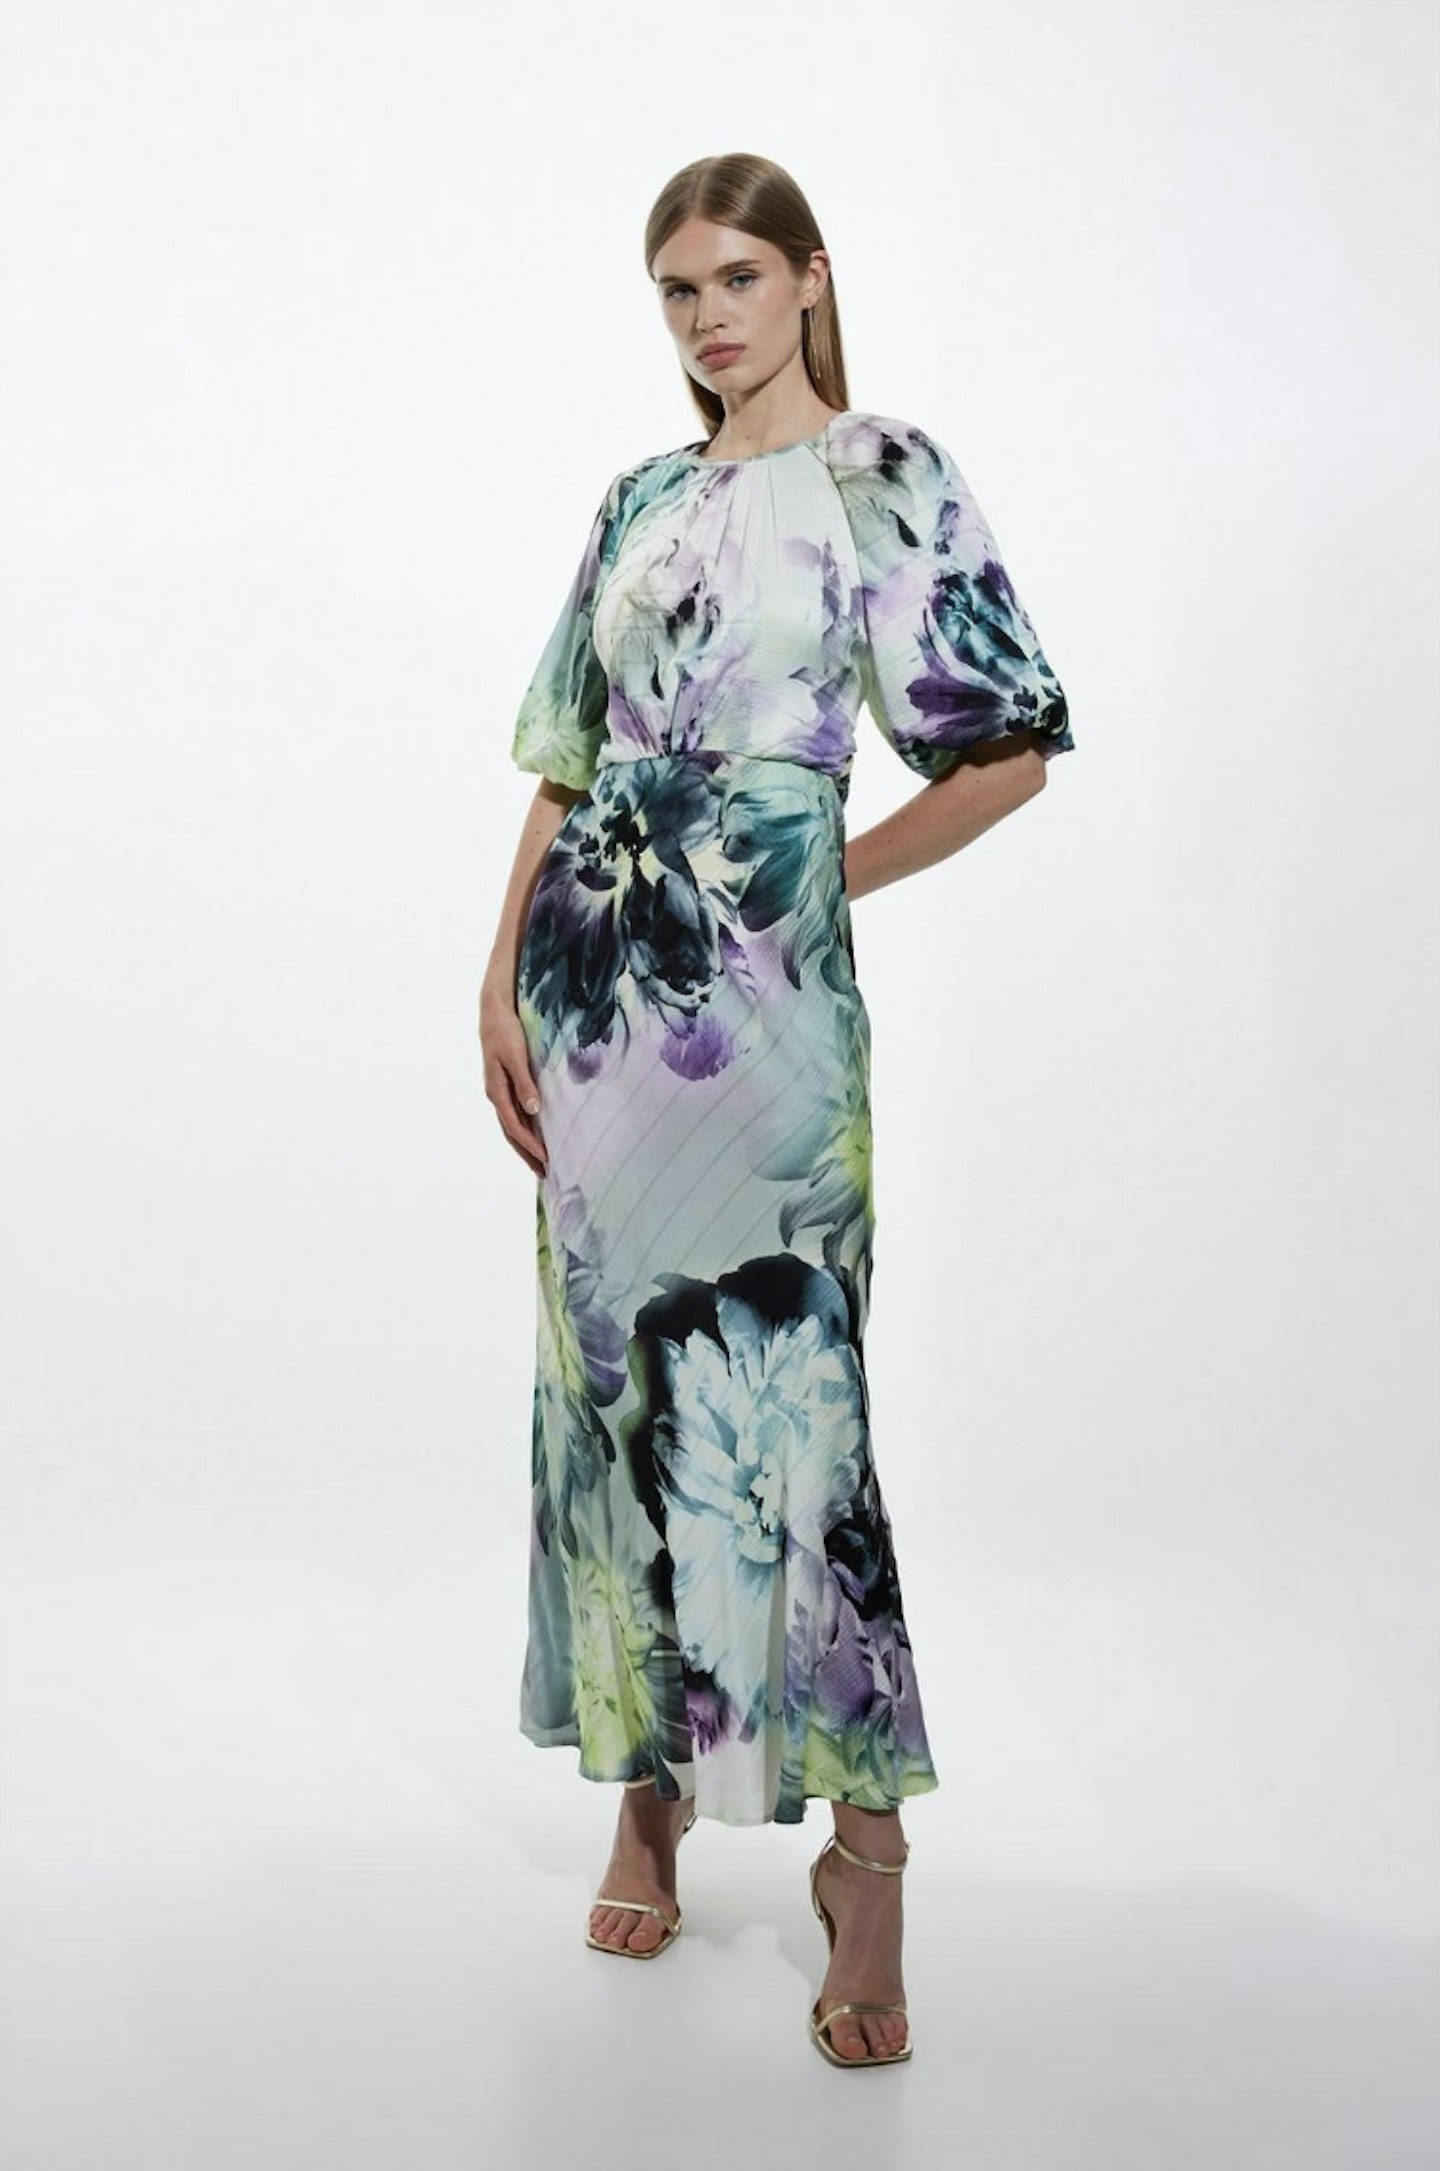 Karen Millen Spring Floral Printed Hammered Satin Woven Midi Dress